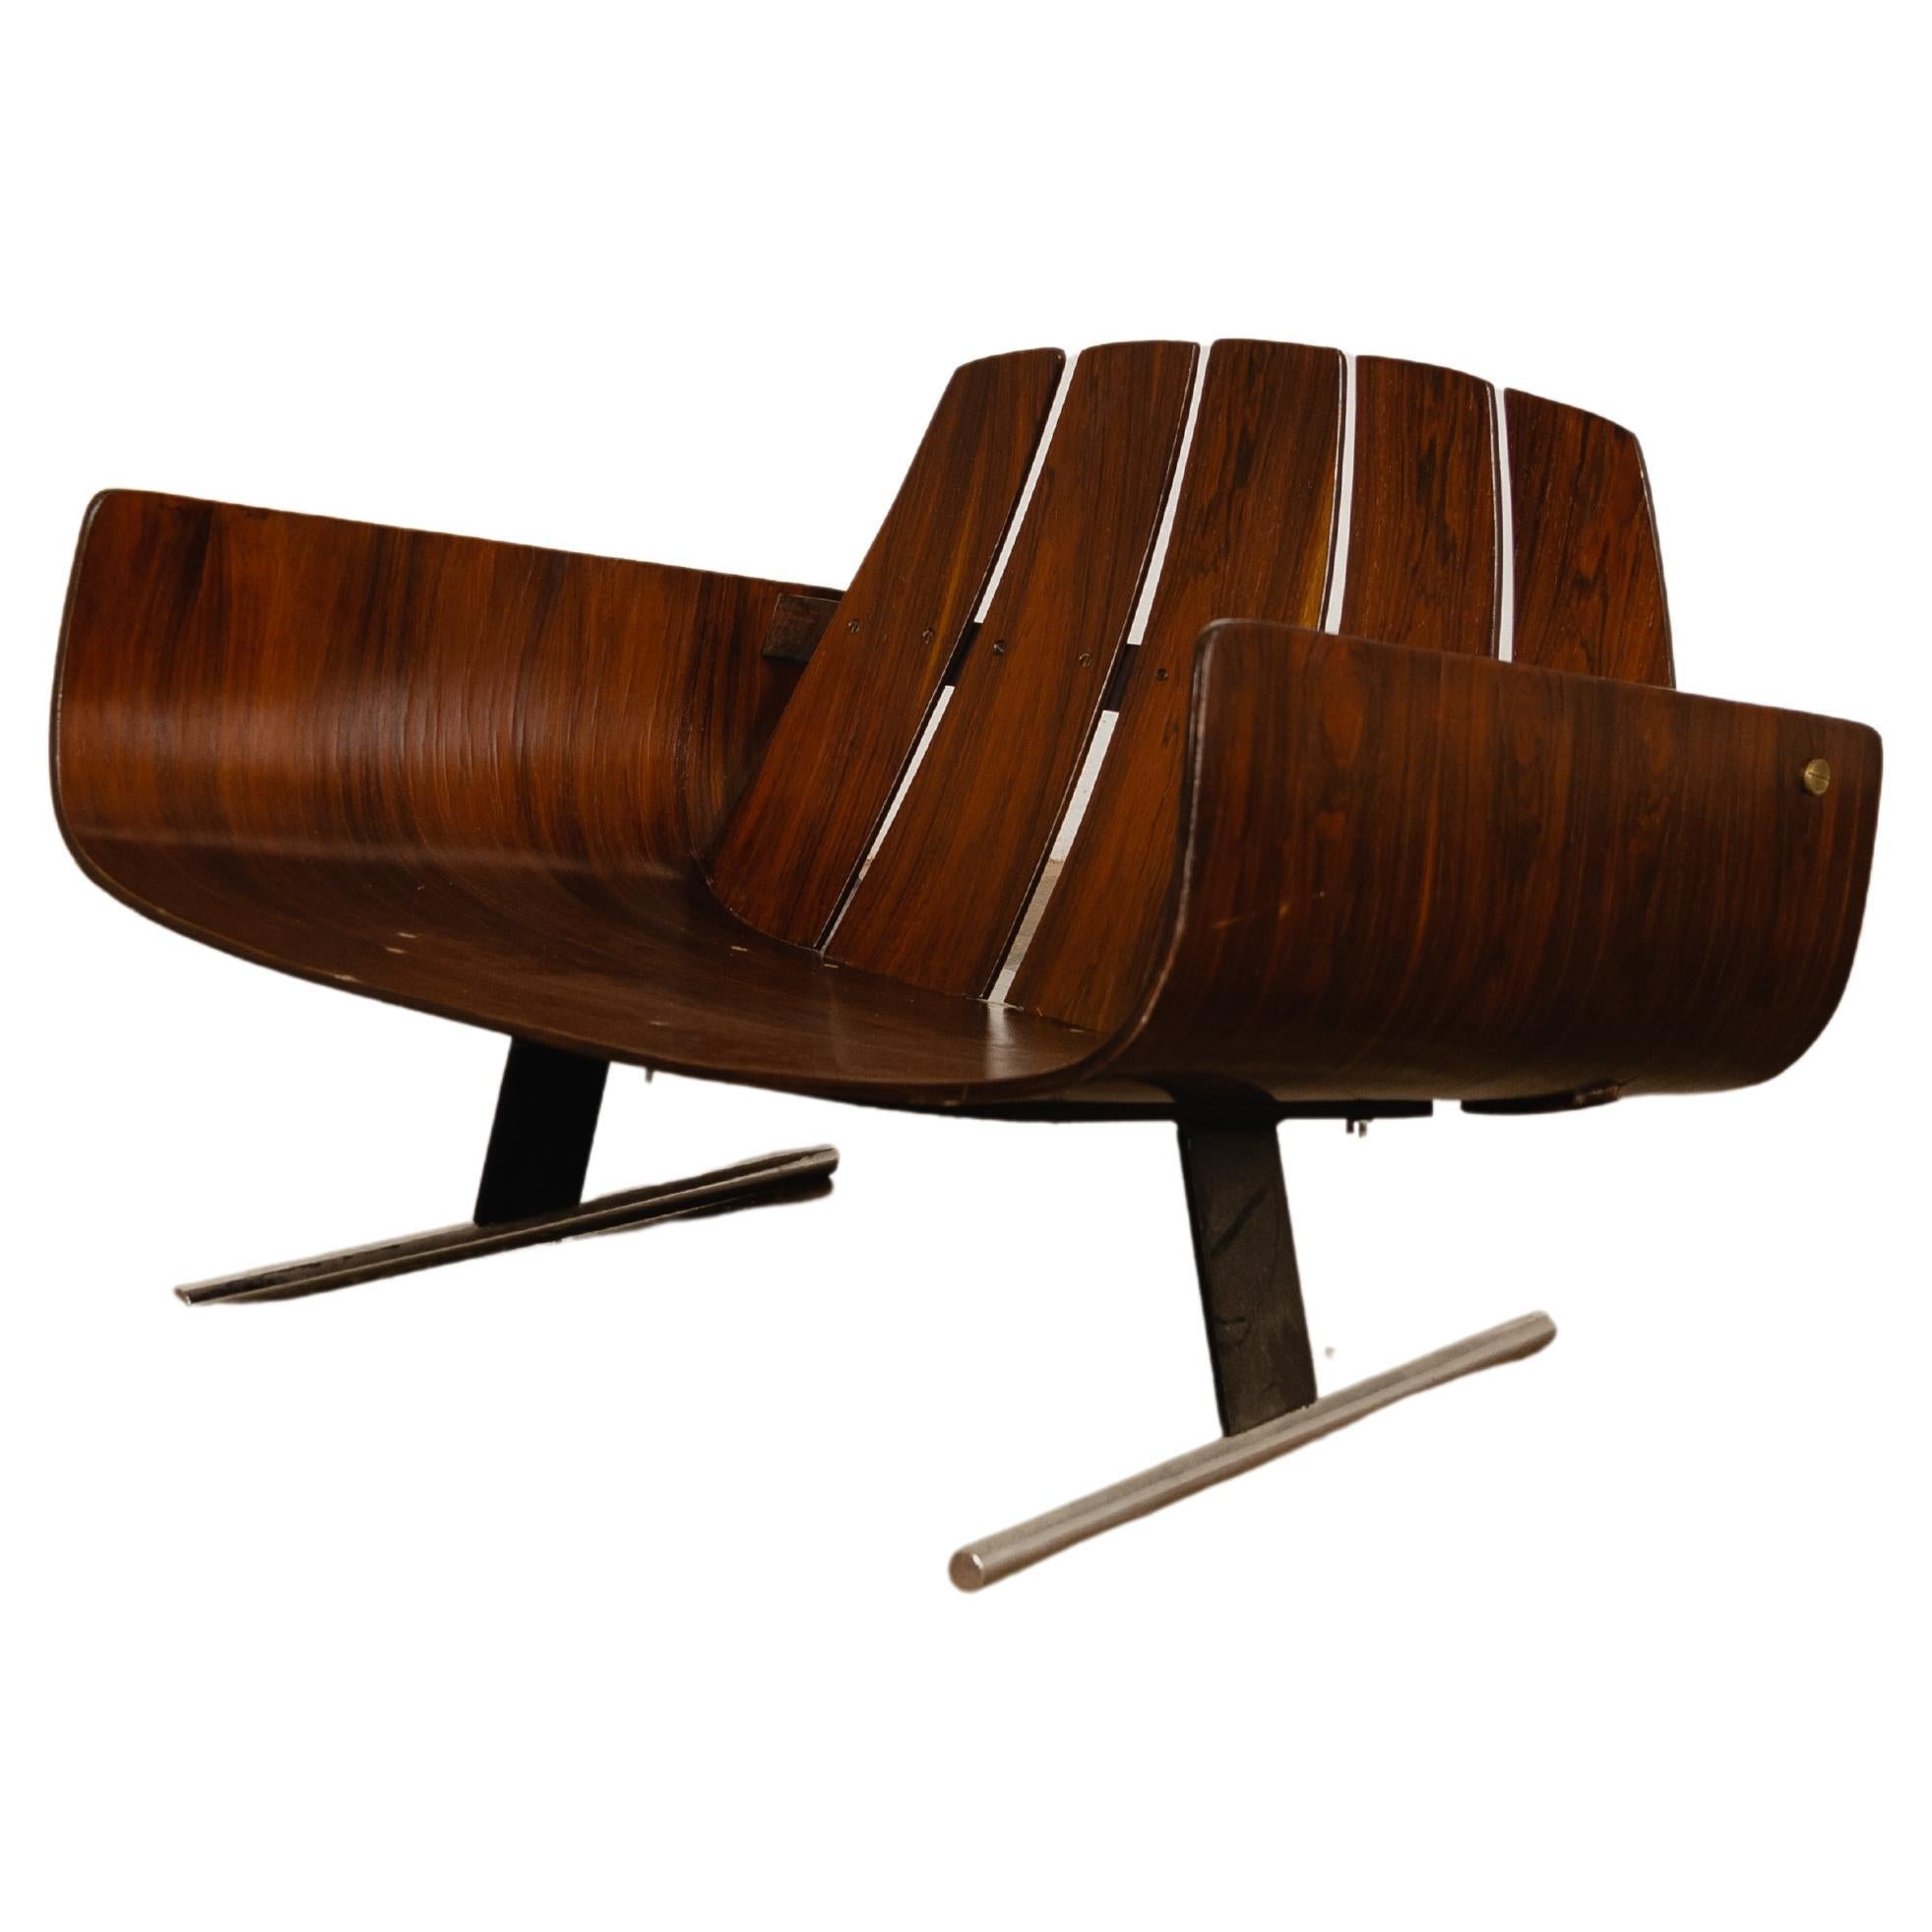 "Presidencial" armchair by Jorge Zalszupin For Sale